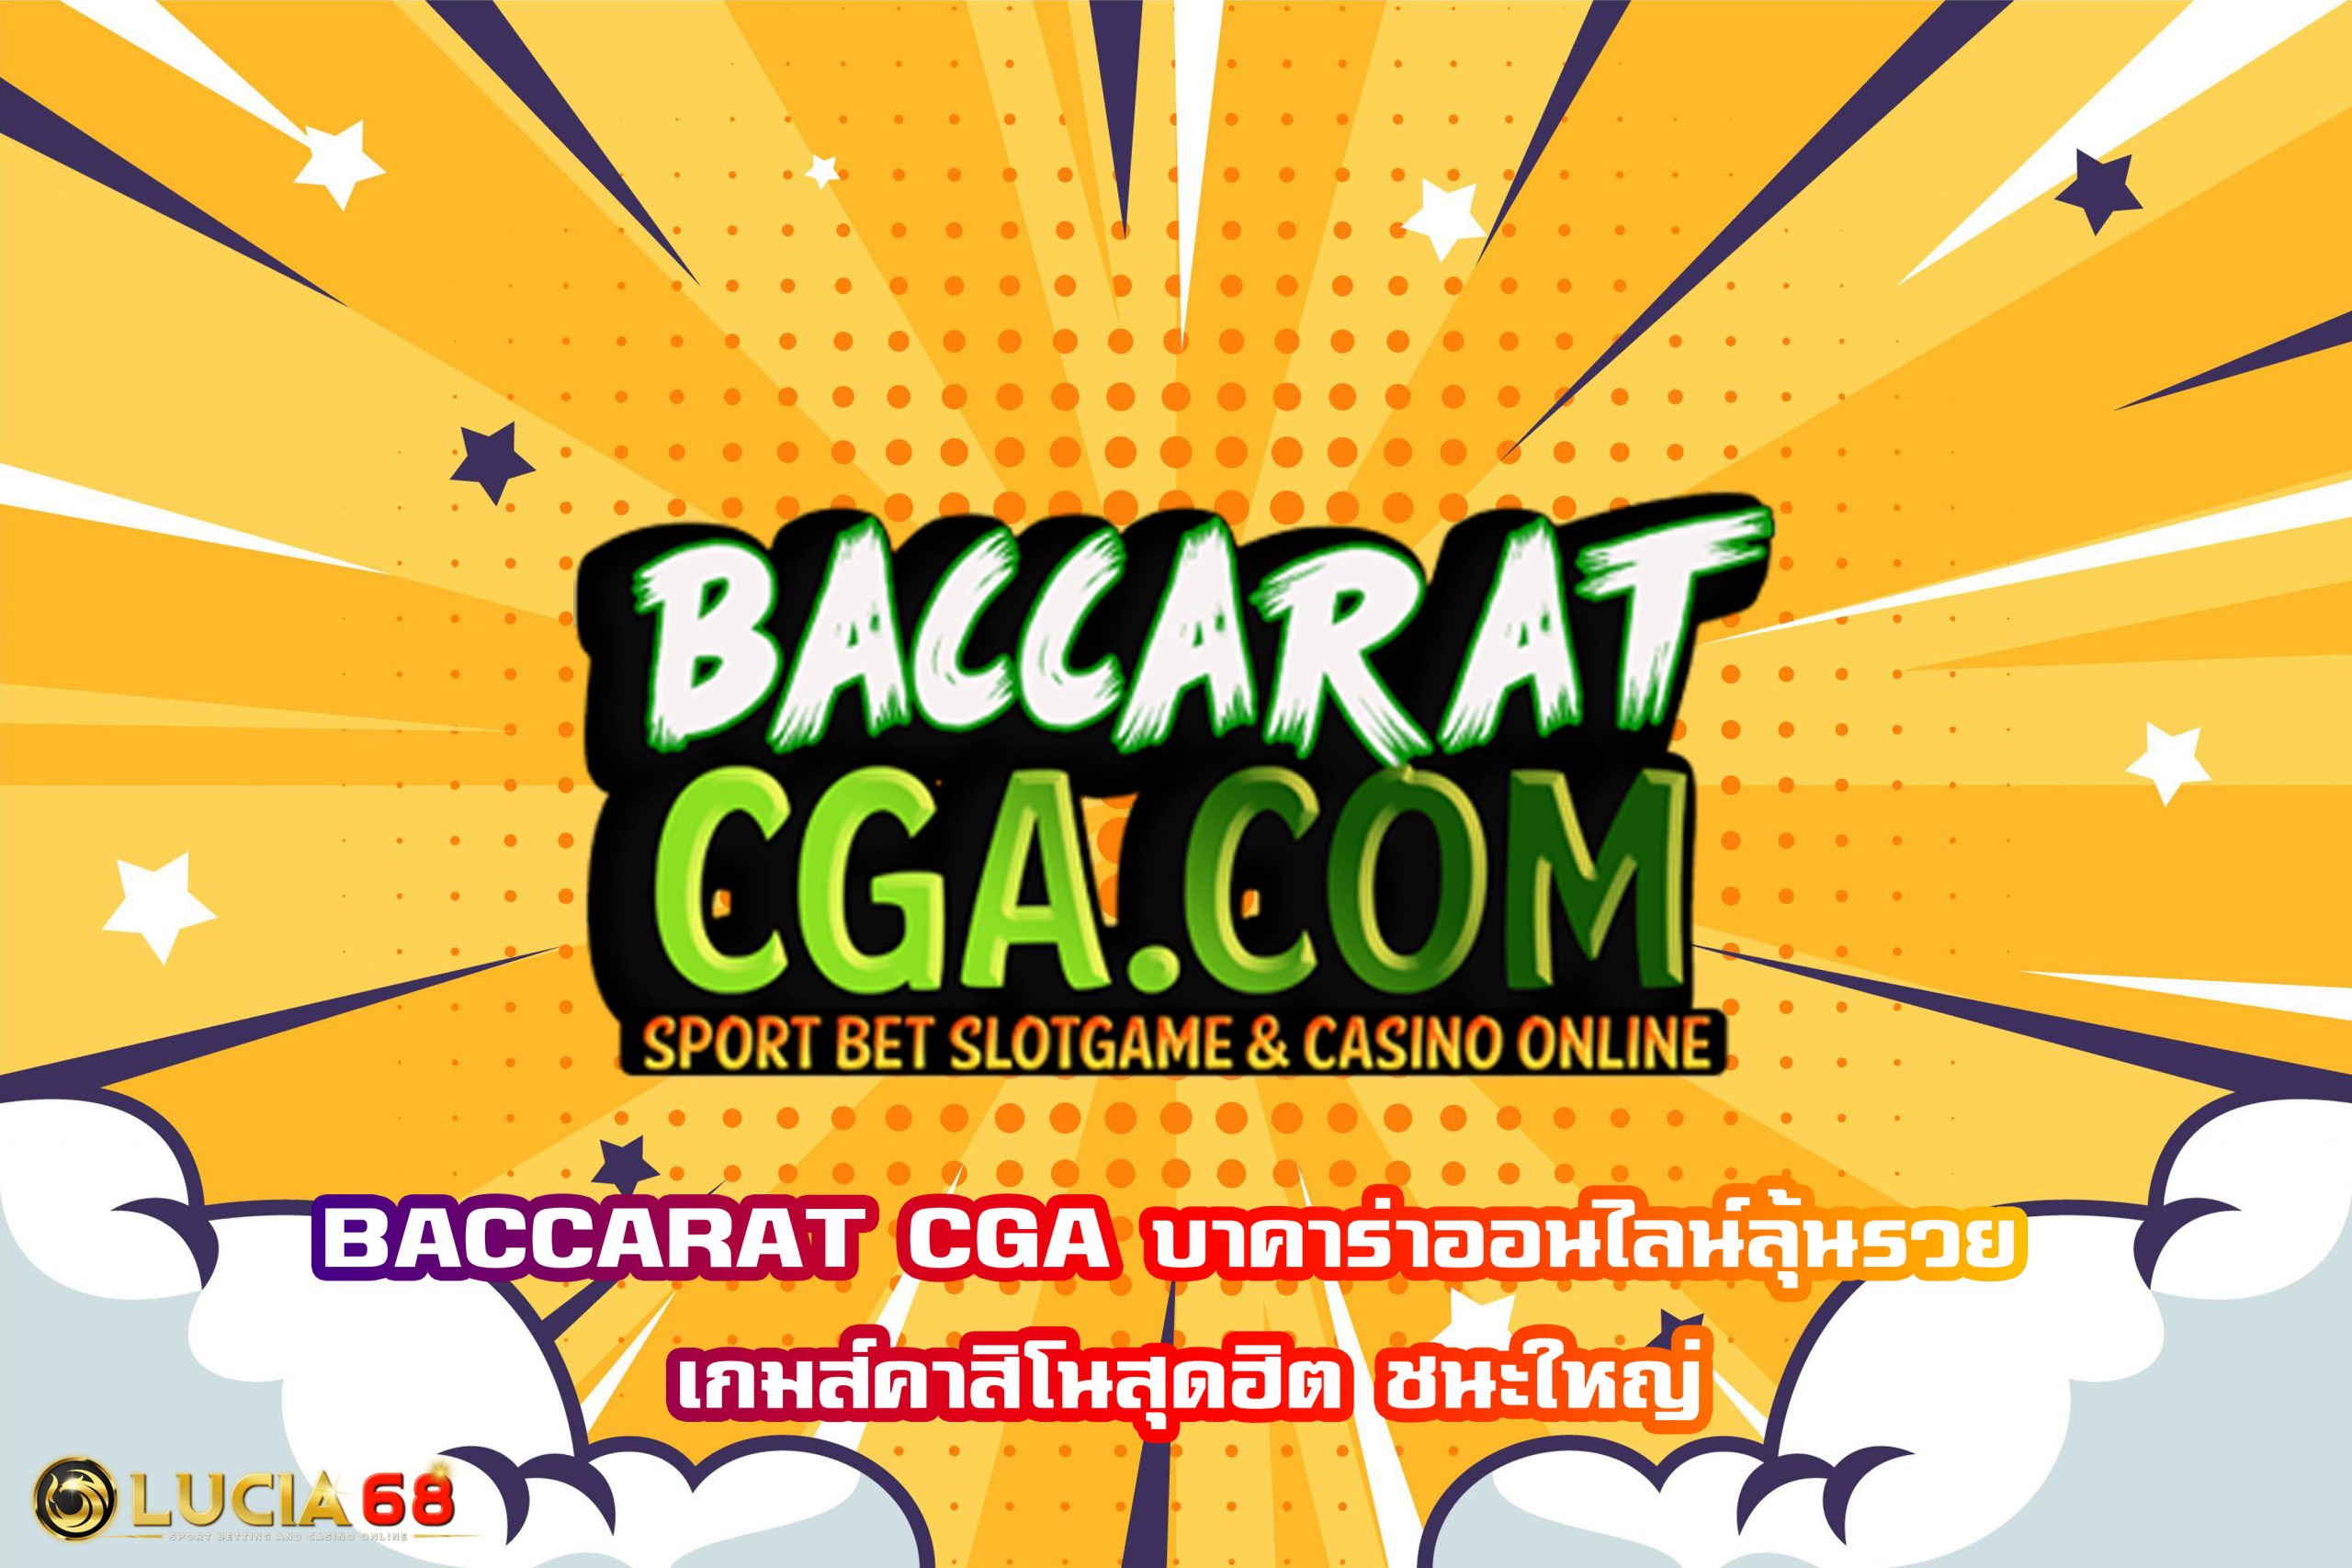 BACCARAT CGA บาคาร่าออนไลน์ลุ้นรวย เกมส์คาสิโนสุดฮิต ชนะใหญ่